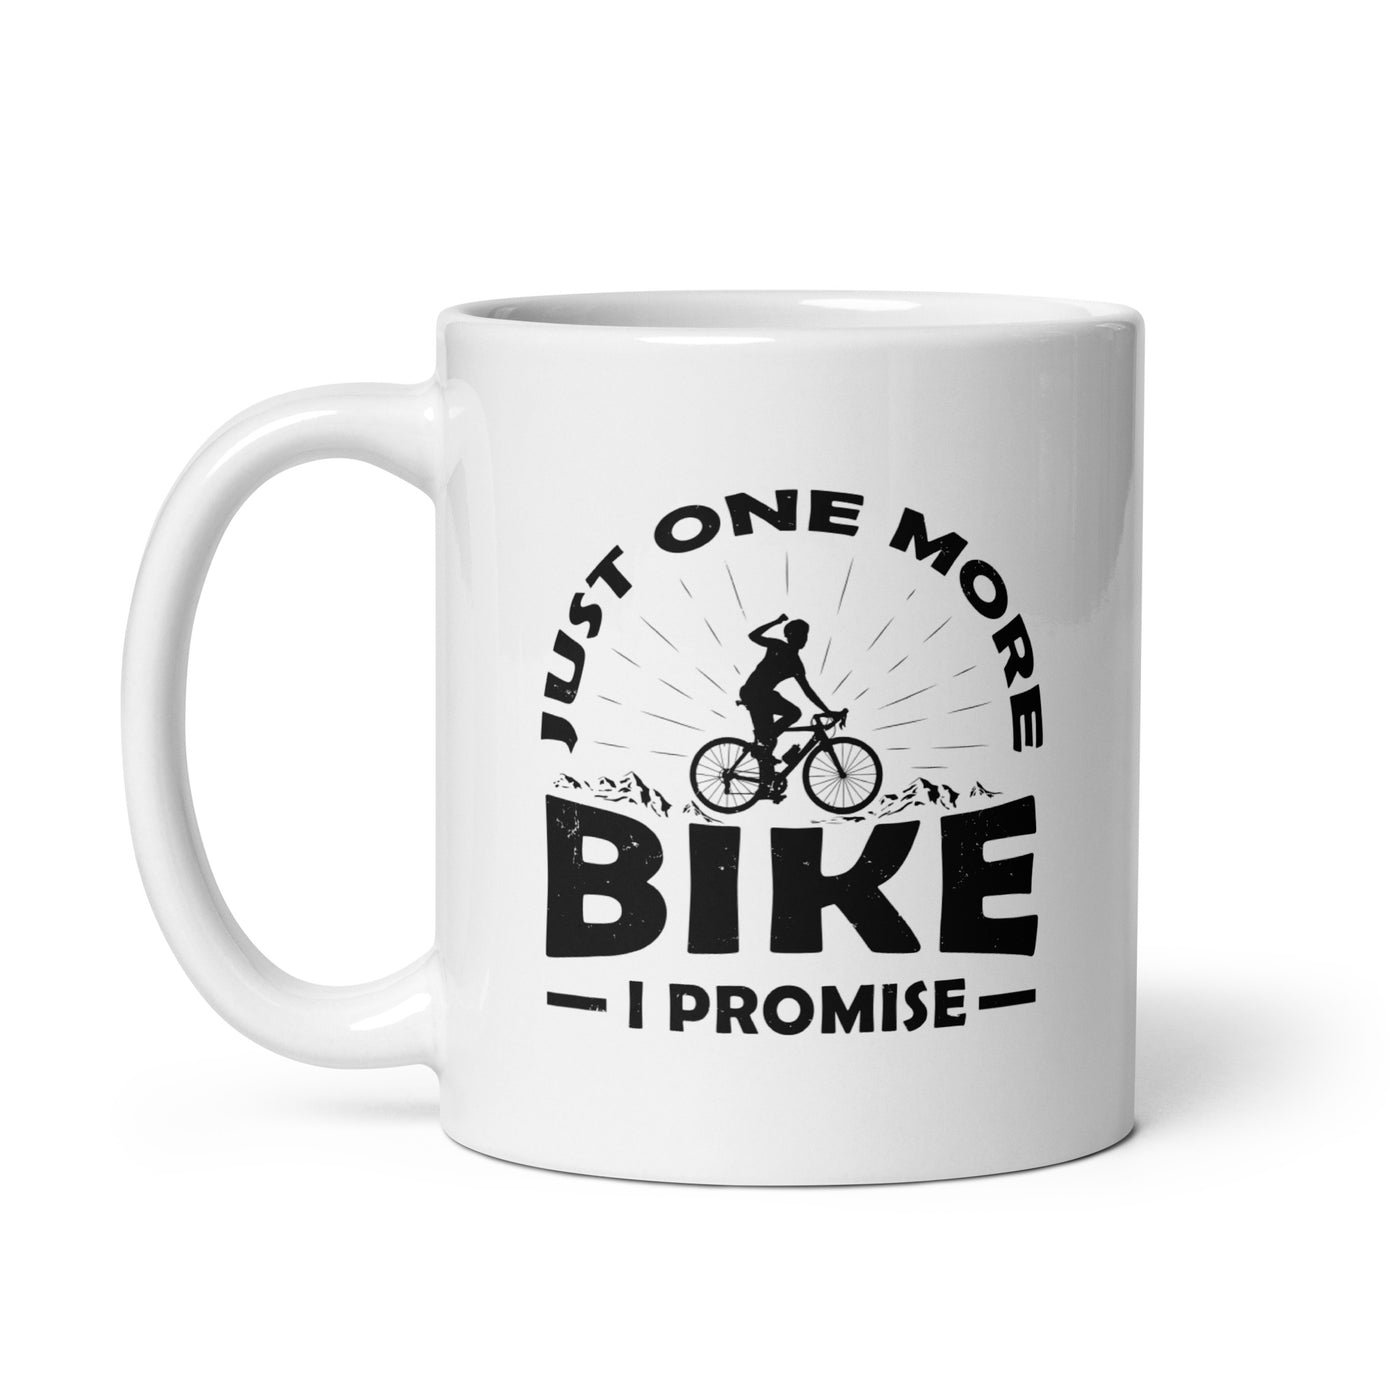 Just One More Bike, I Promise - Tasse fahrrad 11oz